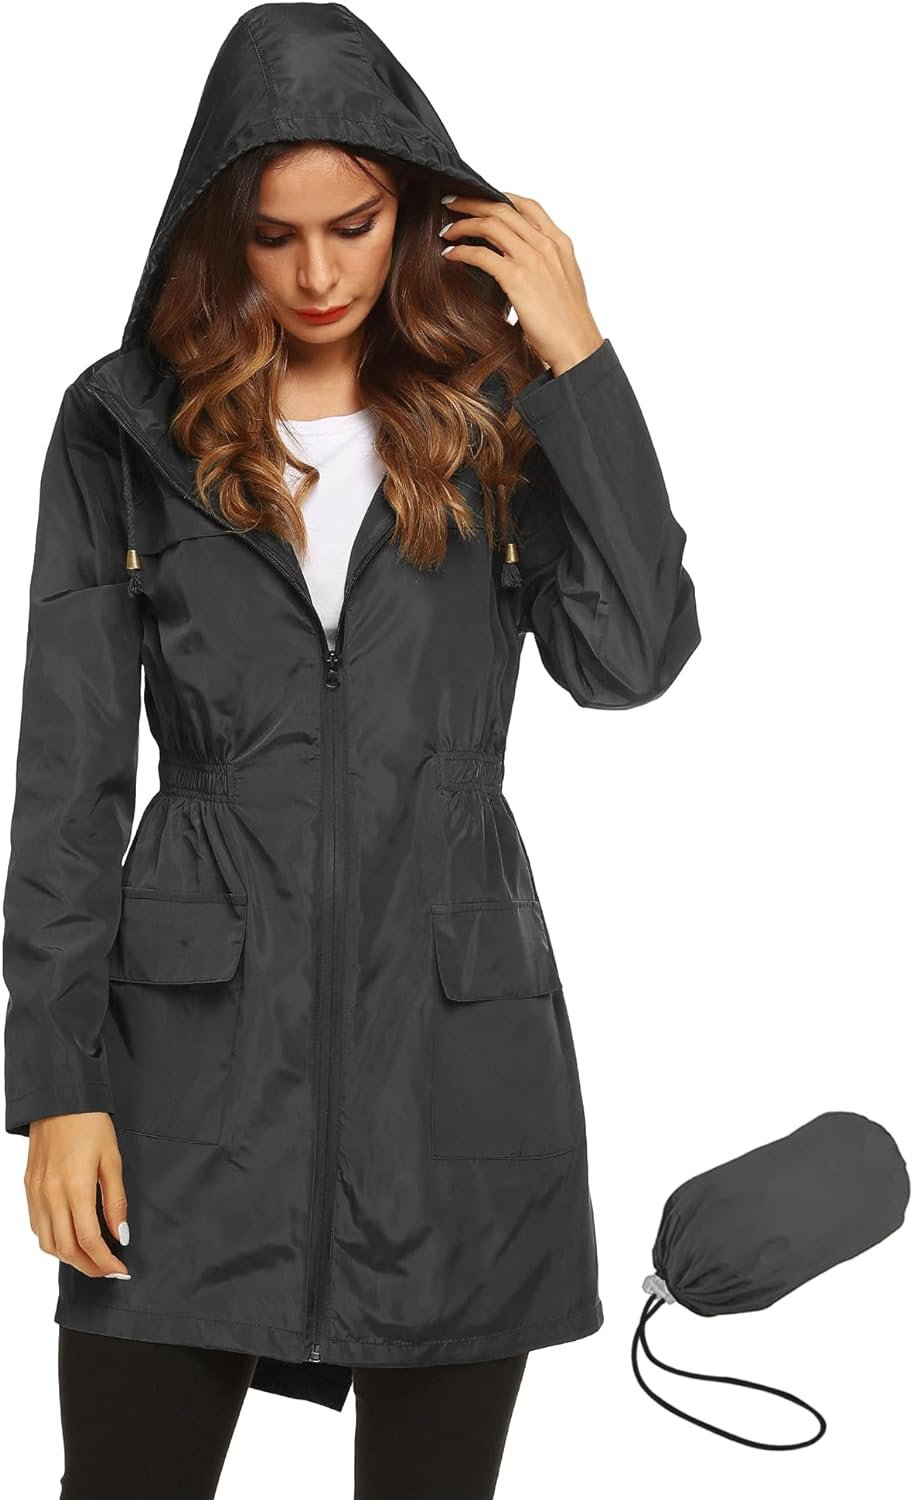 Best Raincoat Jackets: Stylish And Functional Designs - Style VanGuard